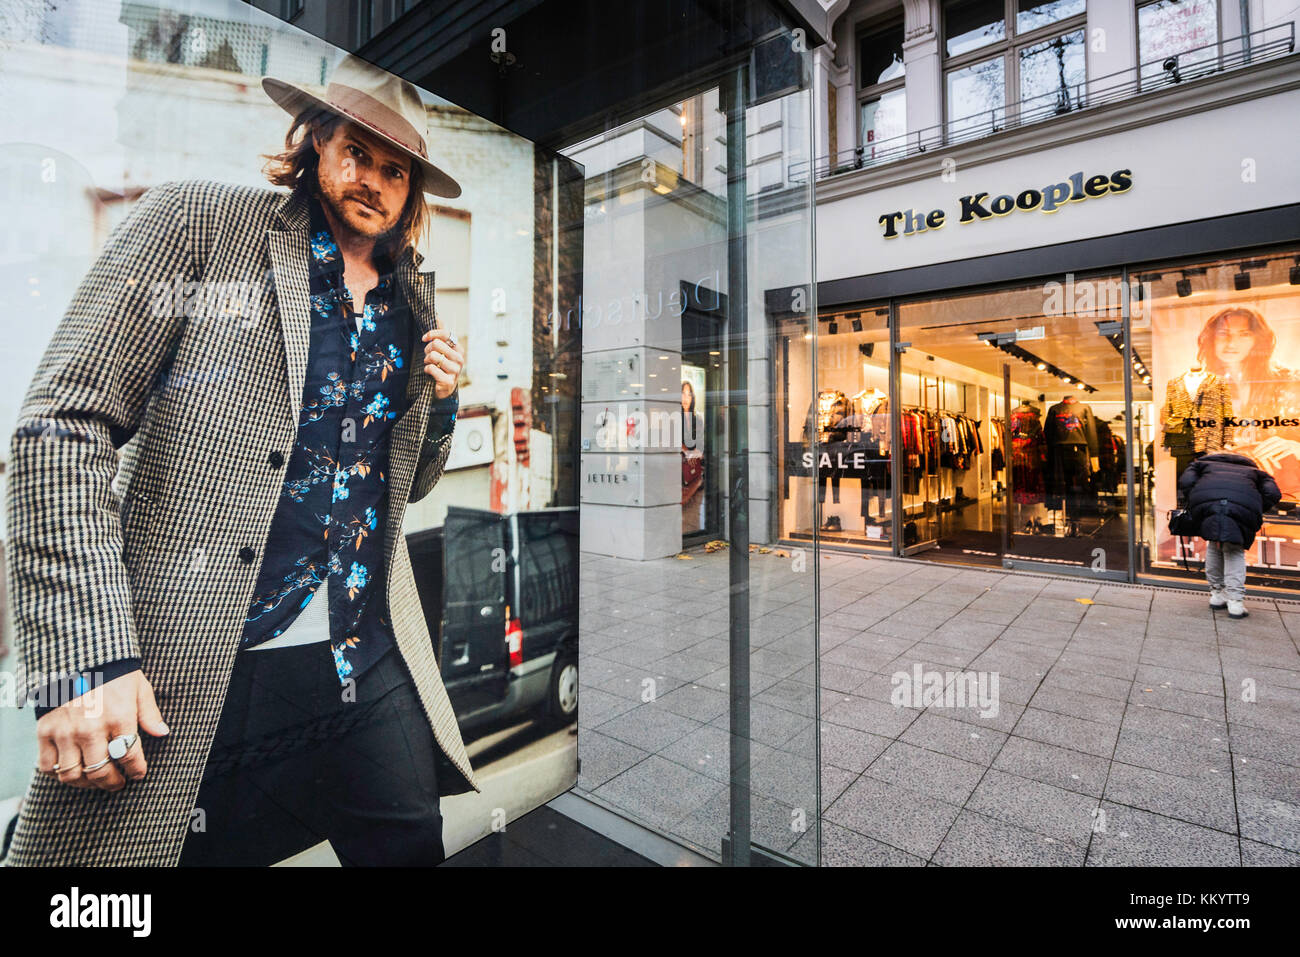 The Kooples store on famous Kurfurstendamm shopping street in Berlin, Germany. Stock Photo